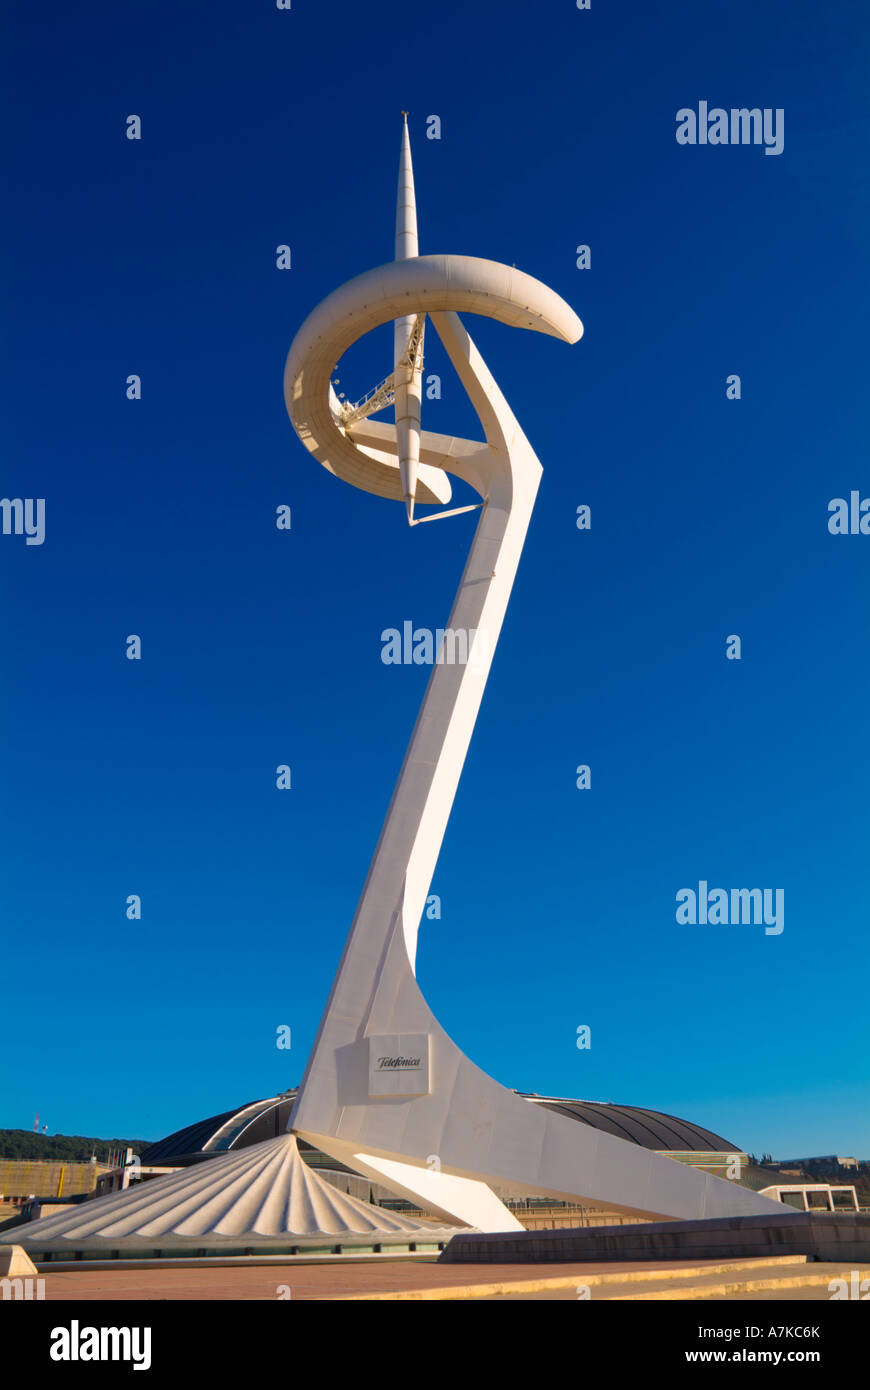 Telefonica telecommunications tower presso Montjuic progettato da Santiago Calatrava Foto Stock